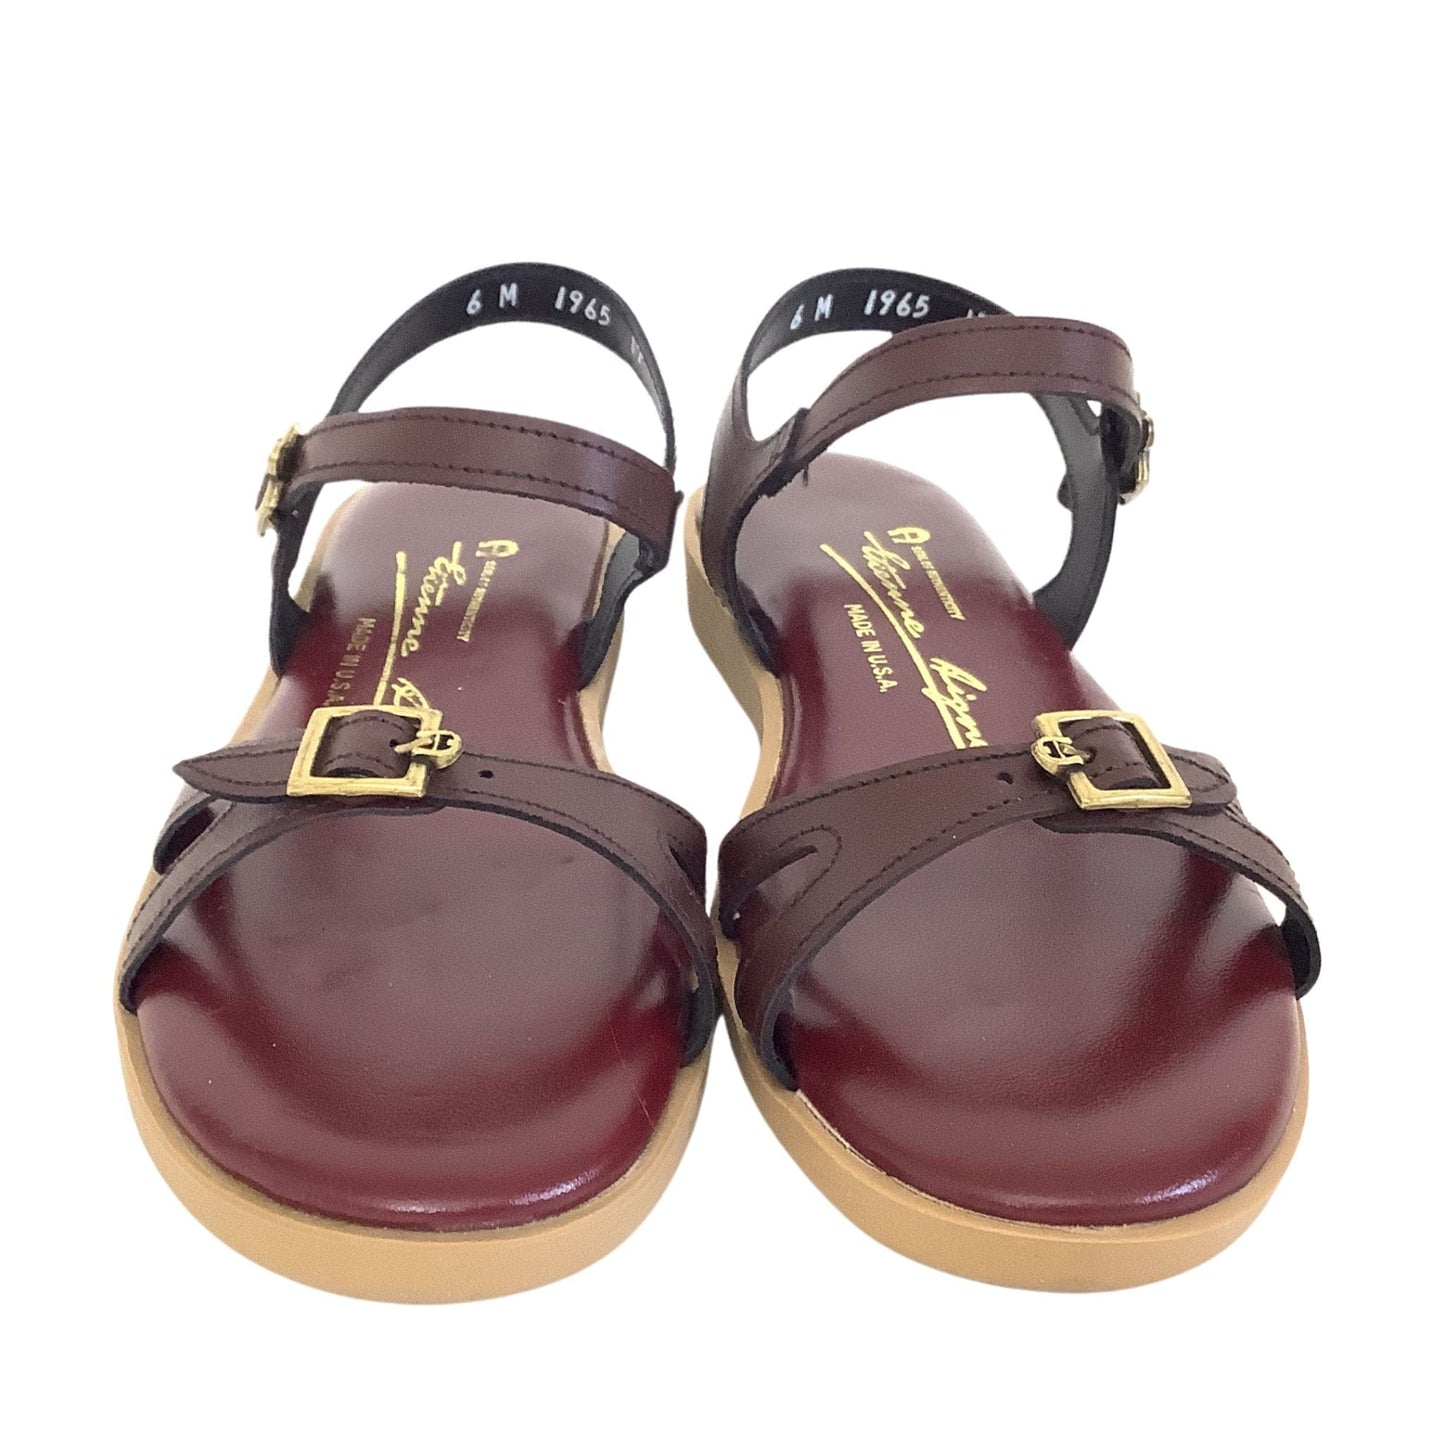 Oxblood Flat Aigner Sandals 6-M / Oxblood / Classic